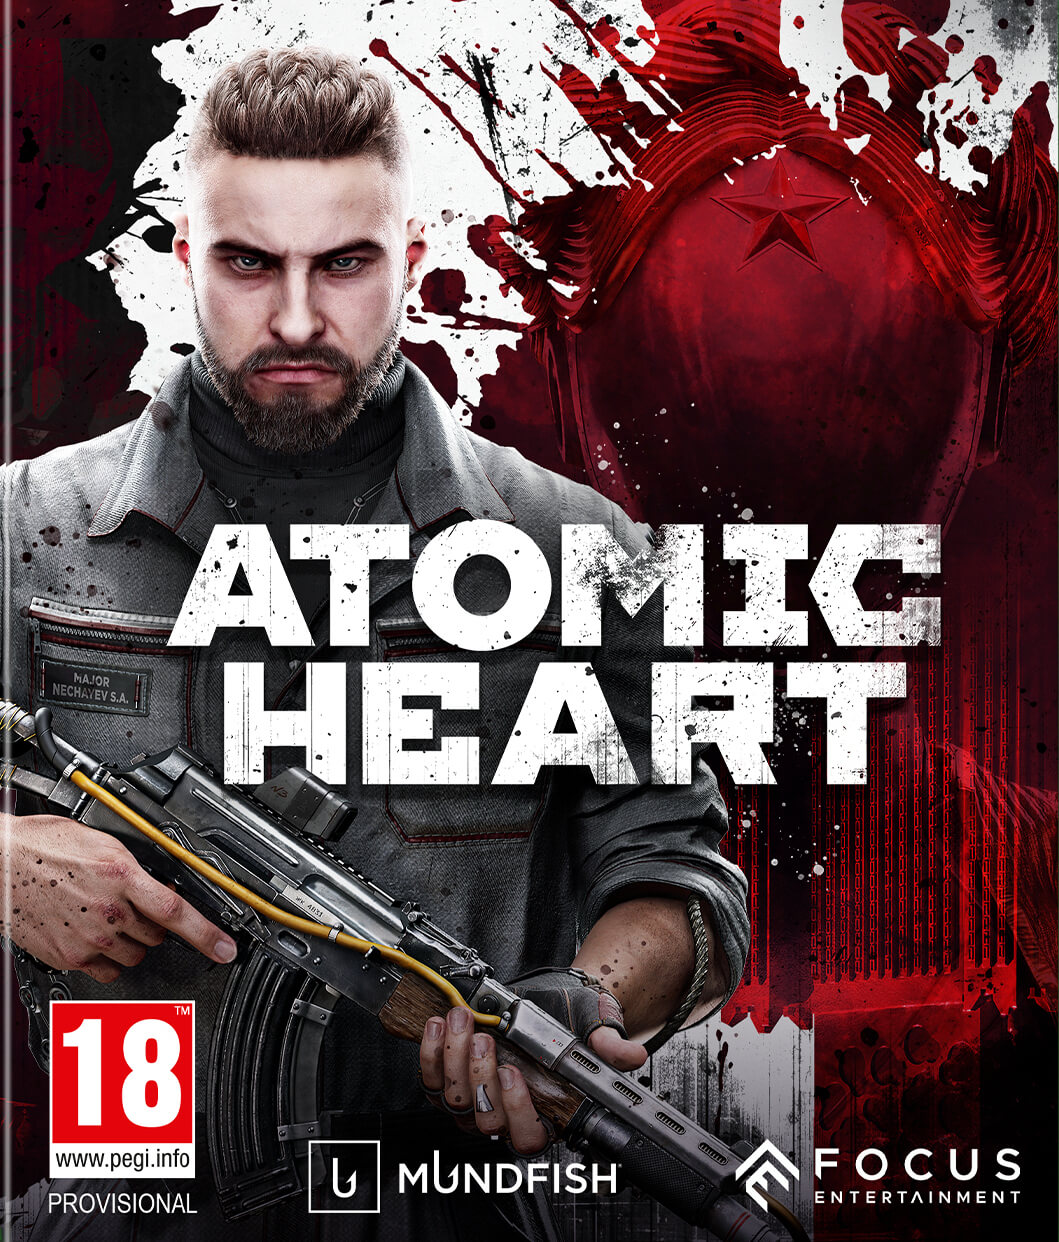 Download Atomic heart font